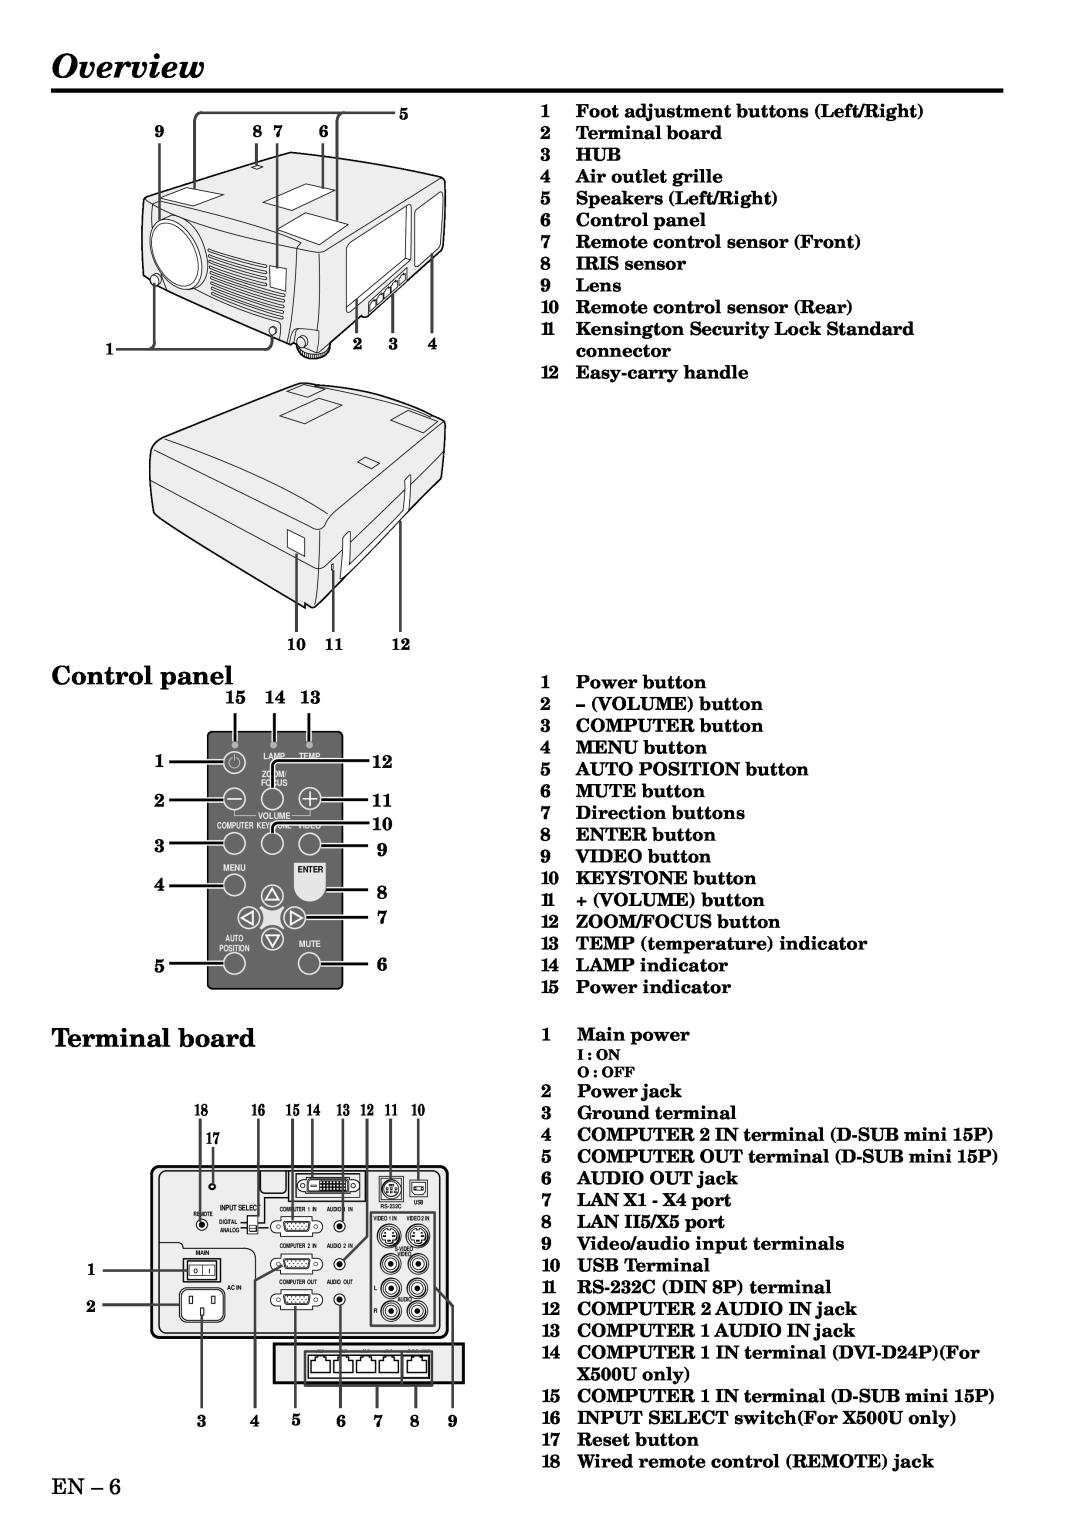 Mitsubishi Electronics X490, X500, S490 Overview, Control panel, Terminal board, 15 14, Remote control sensor Rear 